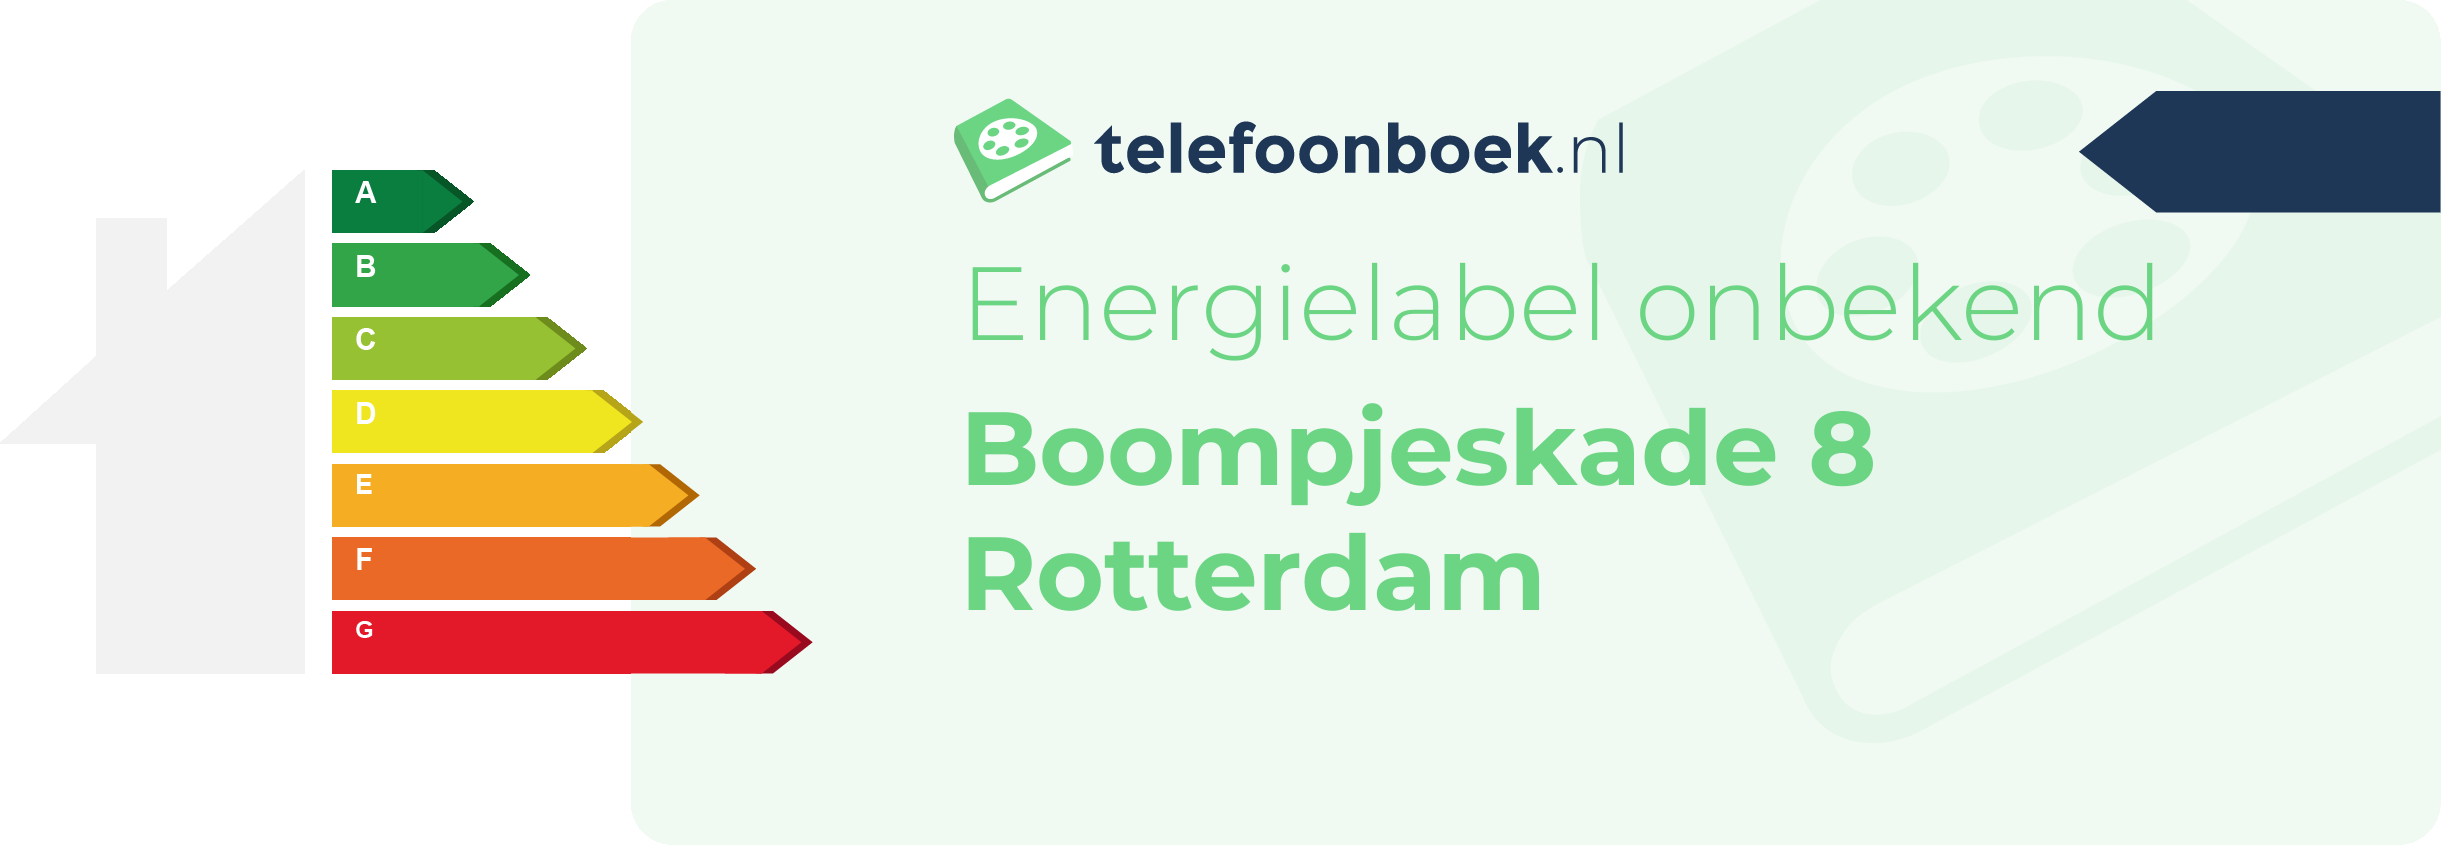 Energielabel Boompjeskade 8 Rotterdam